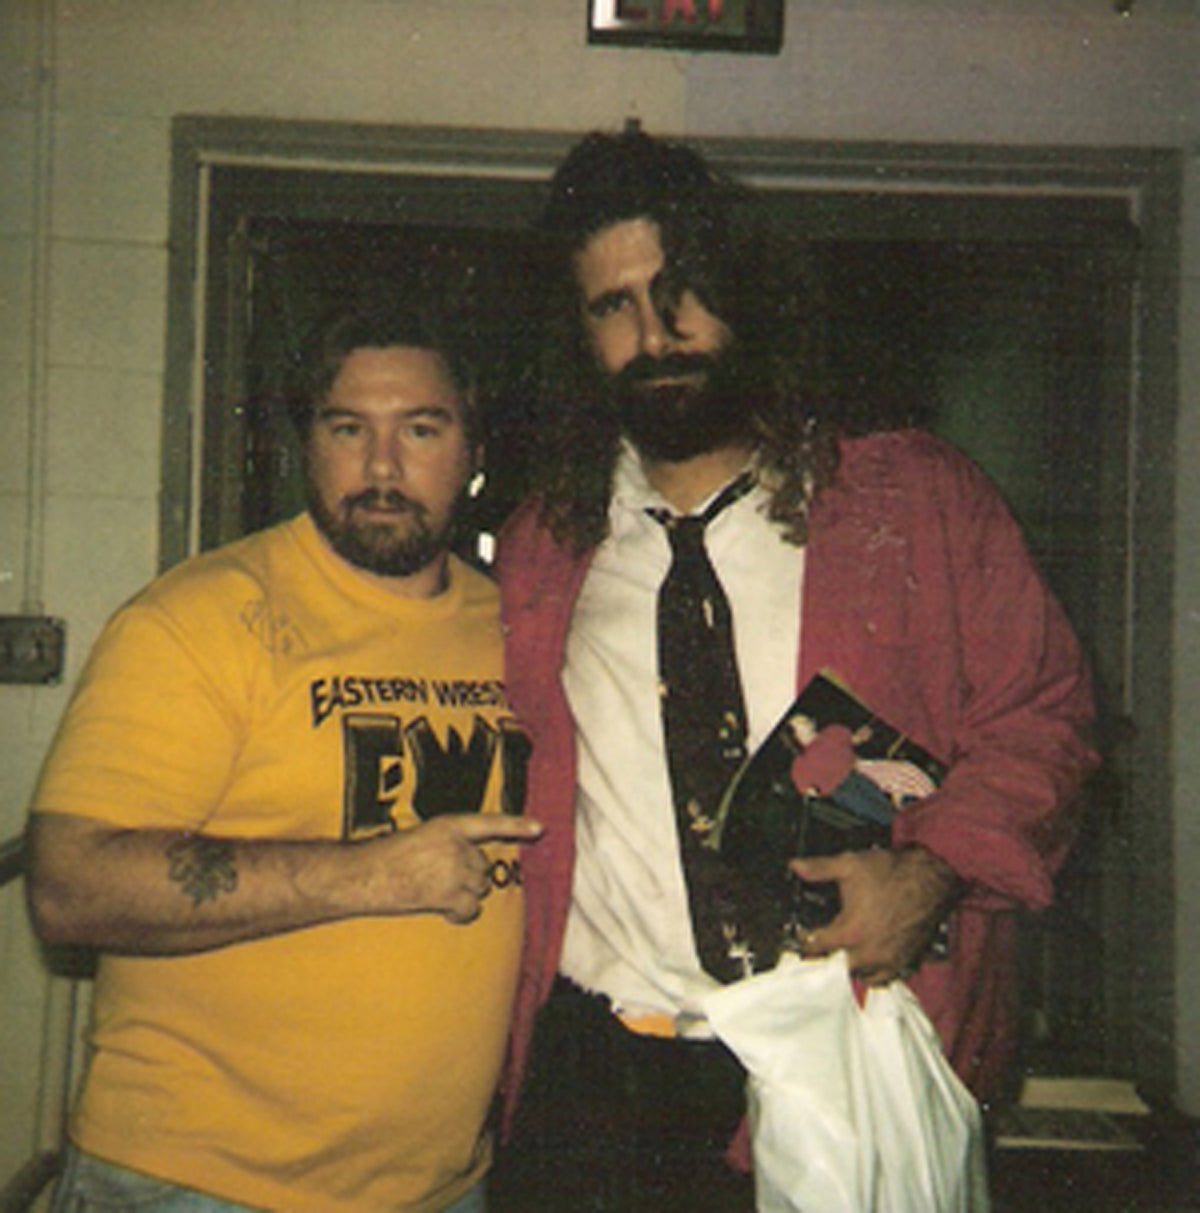 BD177  Mick Foley  Autographed VERY RARE  Vintage Wrestling Magazine w/COA